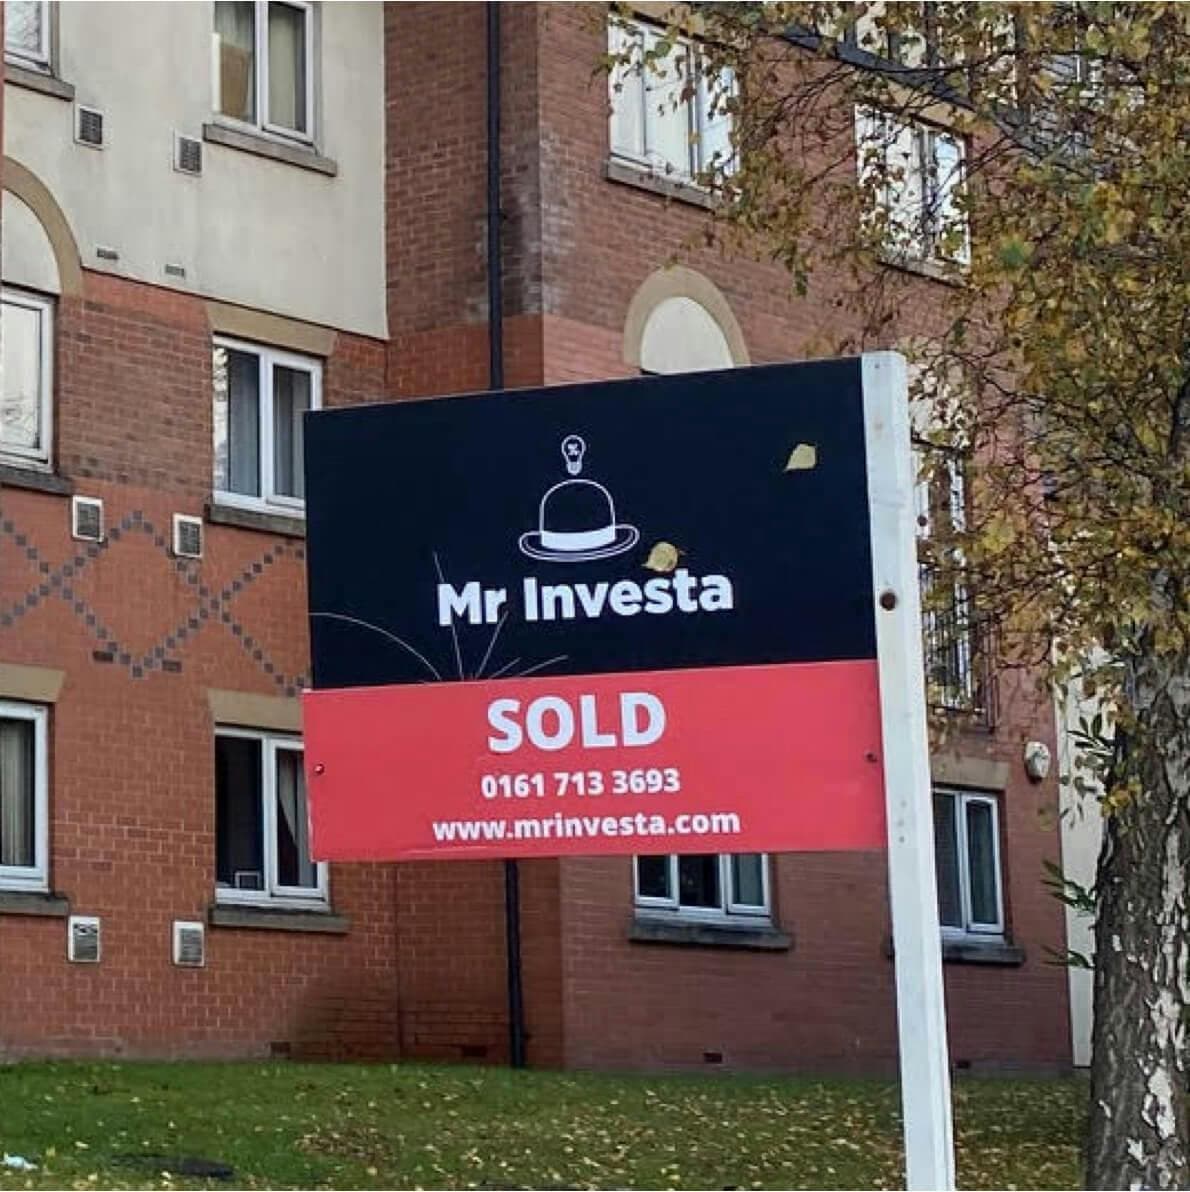 Sold property by Mr Investa